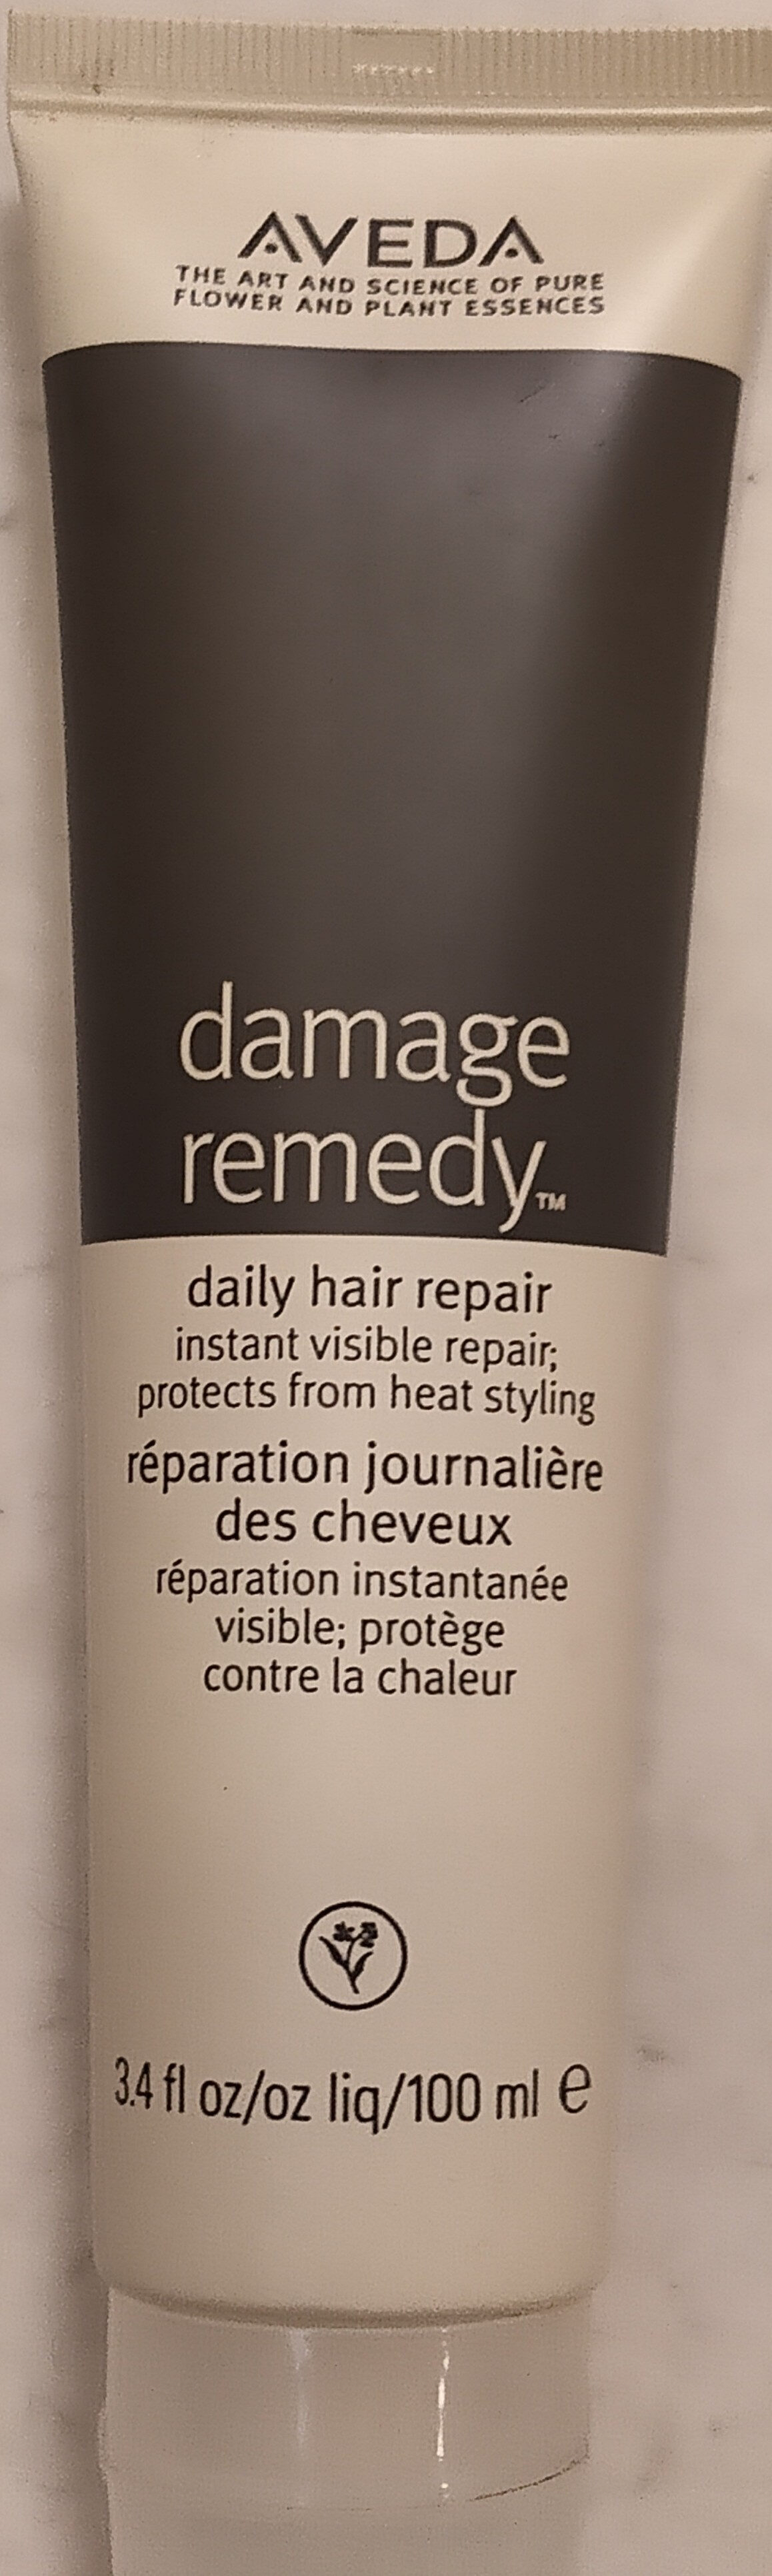 Aveda Damage Ready Daily Hair Repair - Produto - en